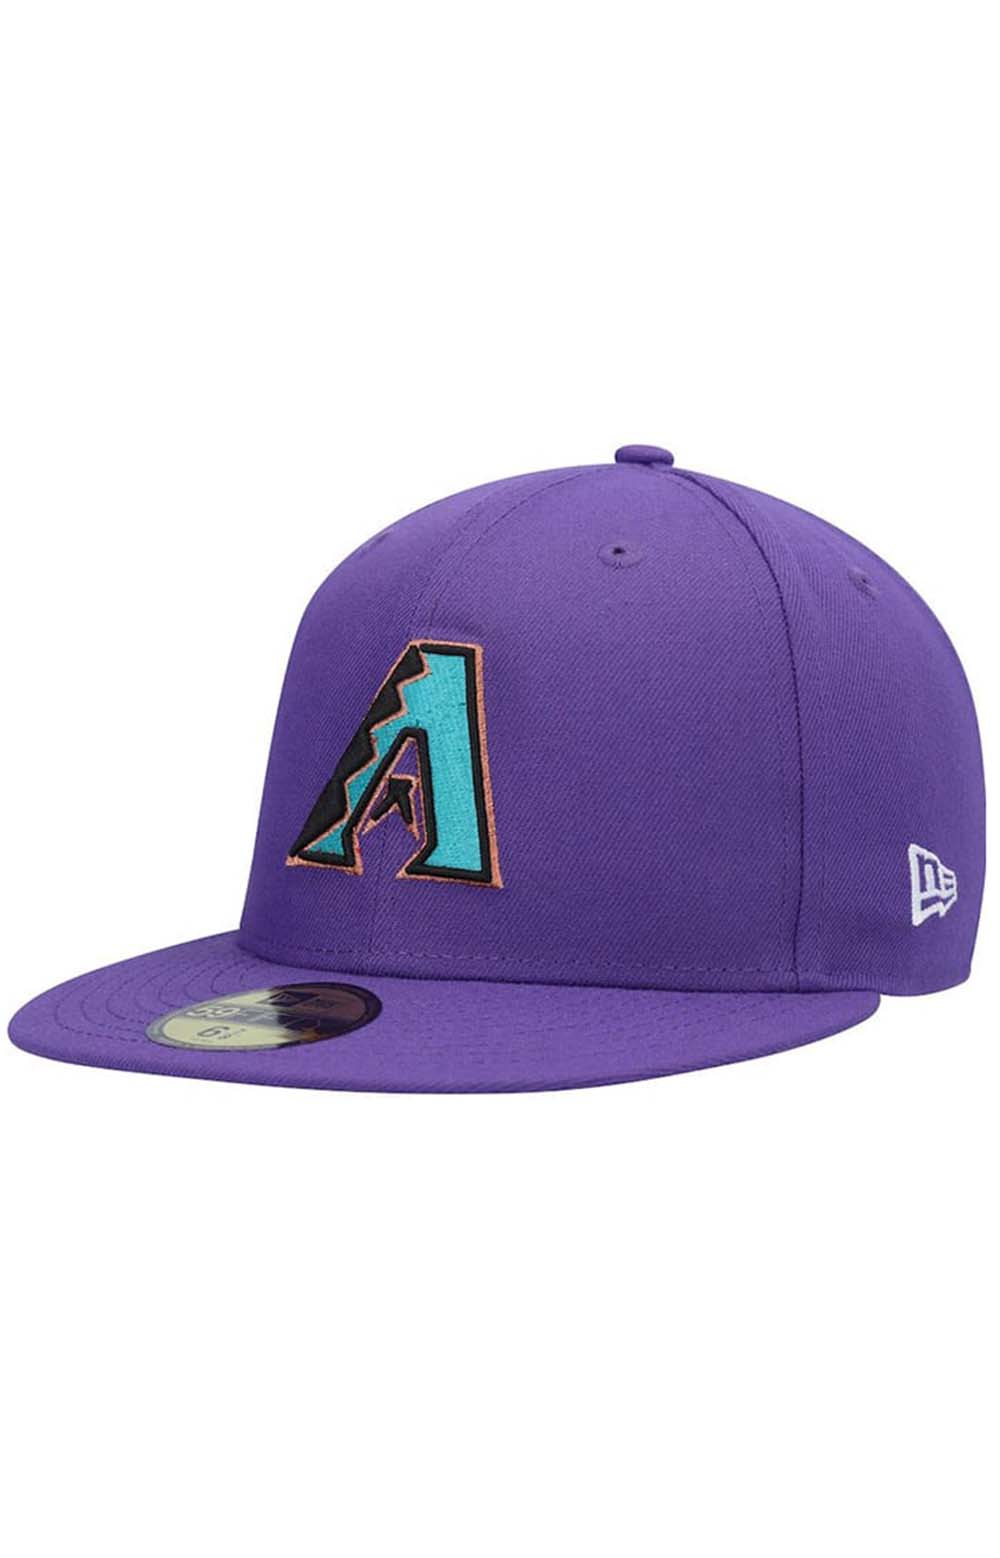 Arizona Diamondbacks Stateview 59FIFTY Fitted Hat